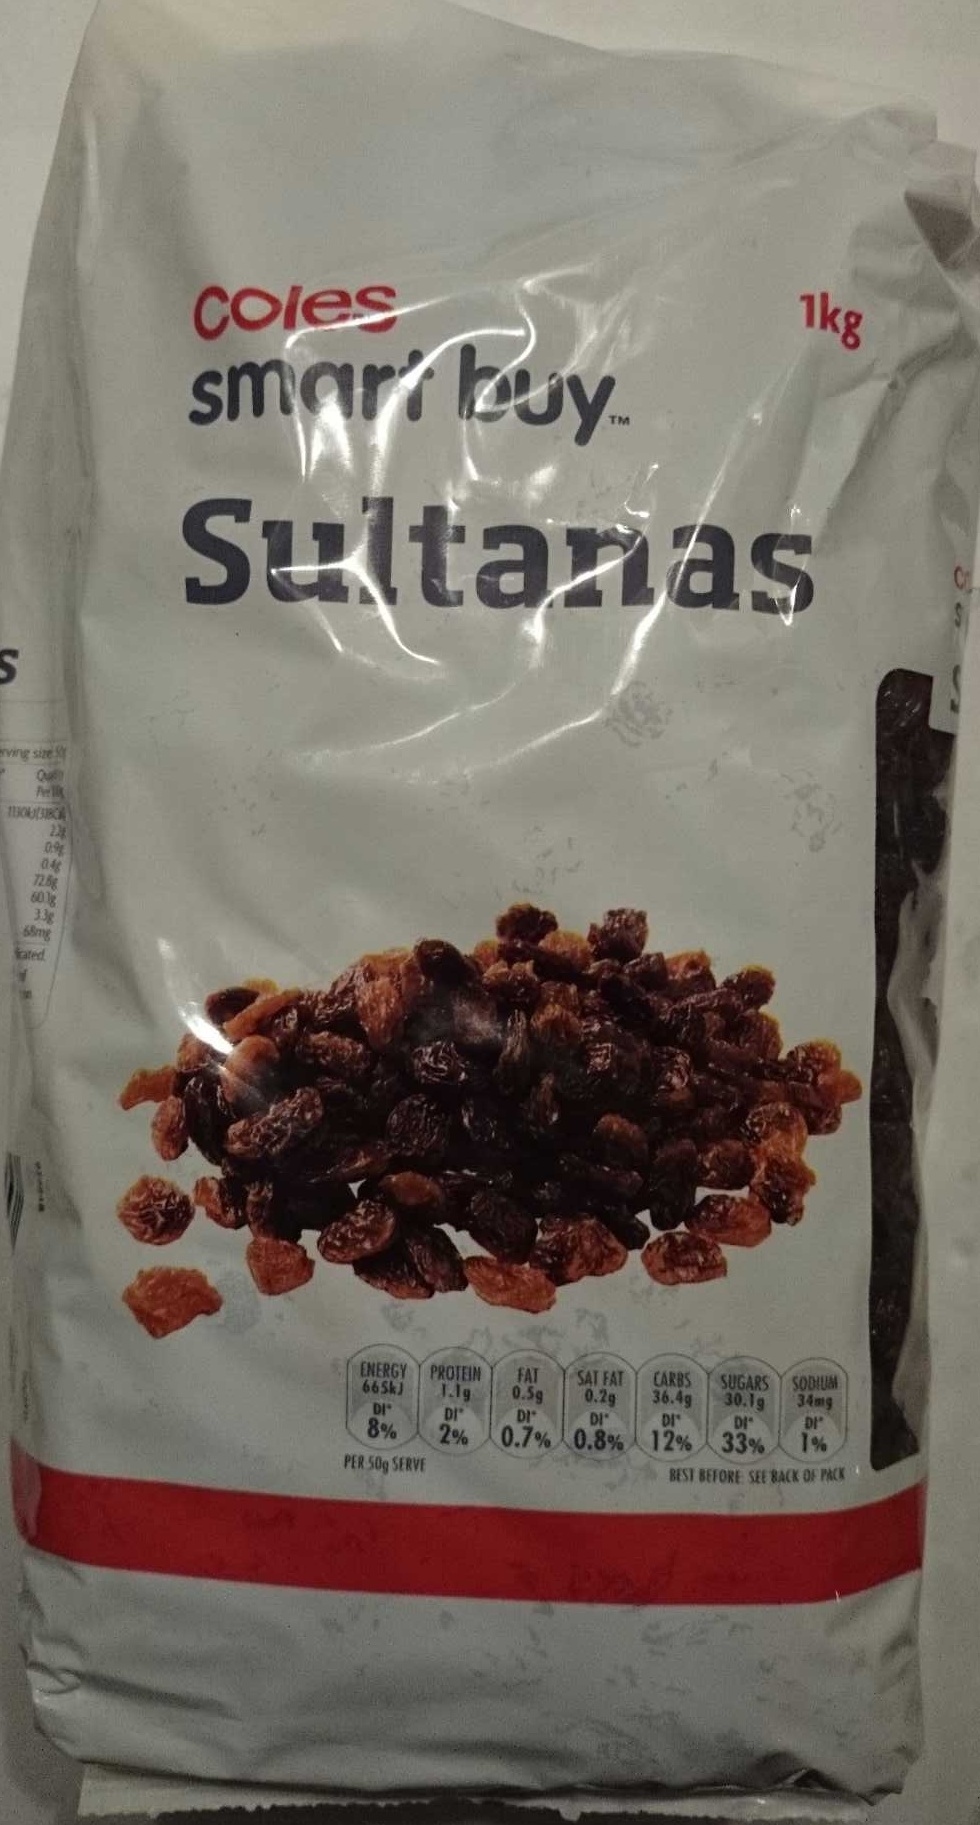 Sultanas - Product